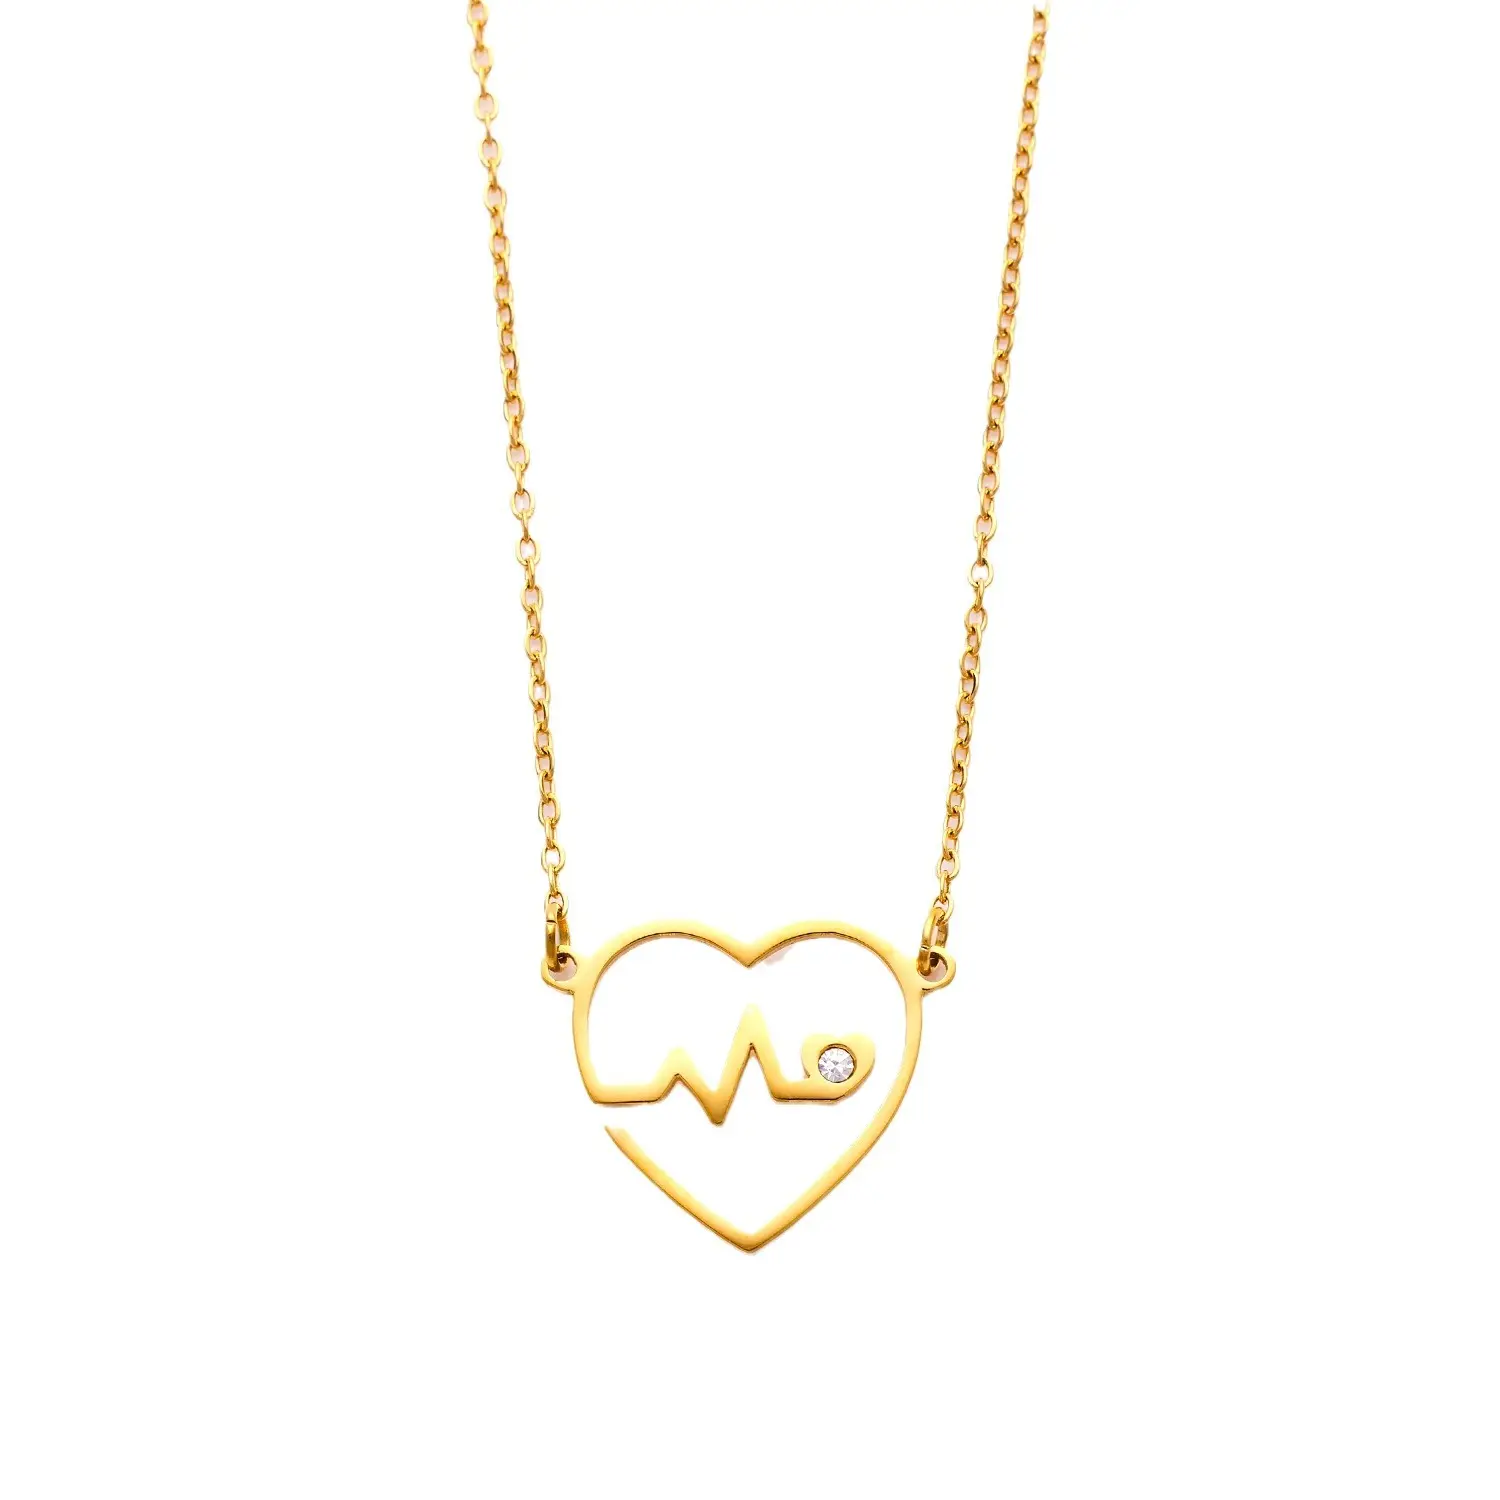 Damen-Schmuck hochwertig 18K Gold plattiert Edelstahl dünn-Link-Kette Herz Anhänger Halskette für Damen Liebesgeschenk